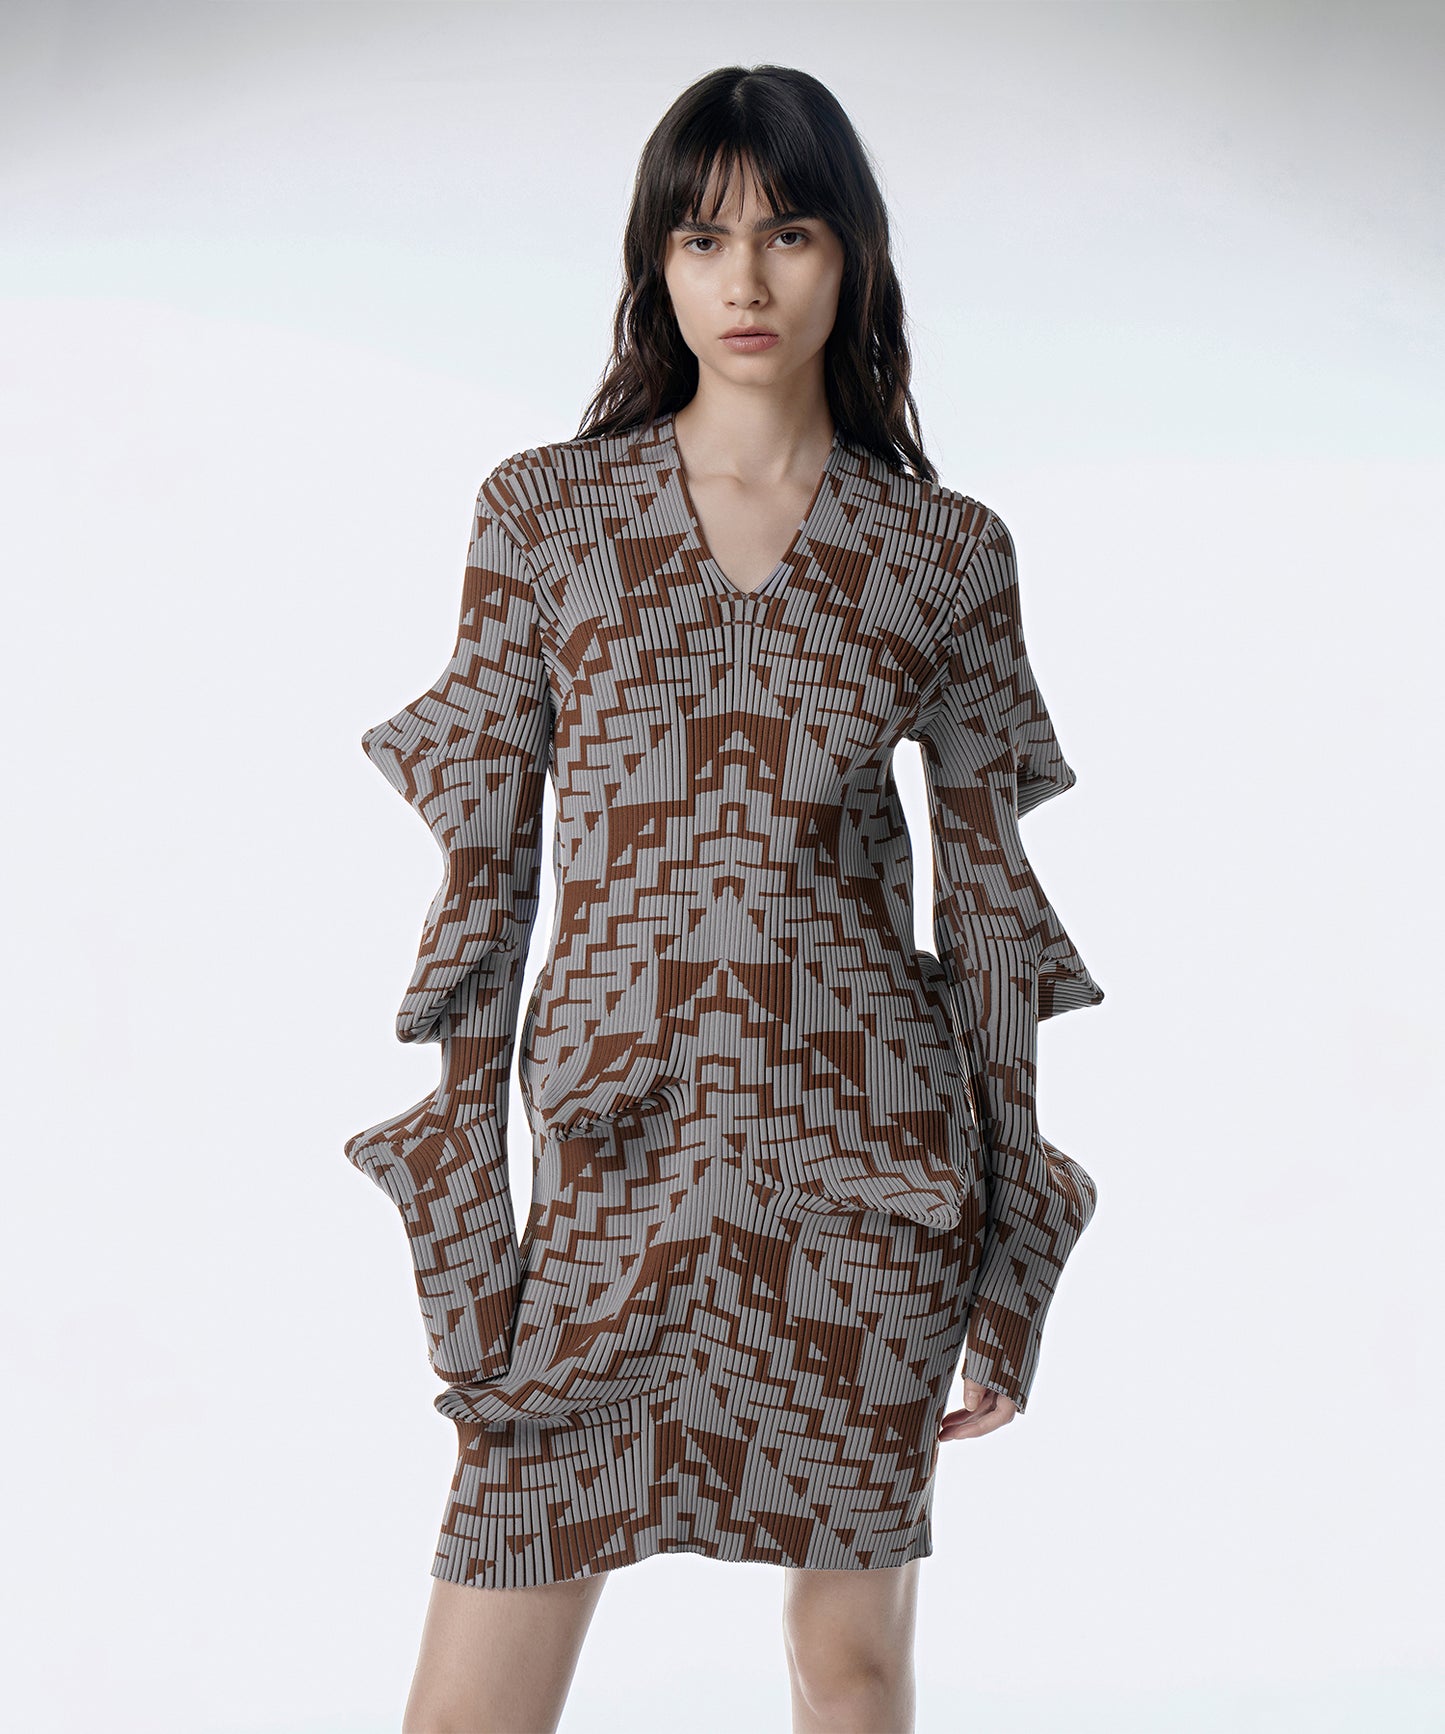 African Geometric 3D Polyester Dress